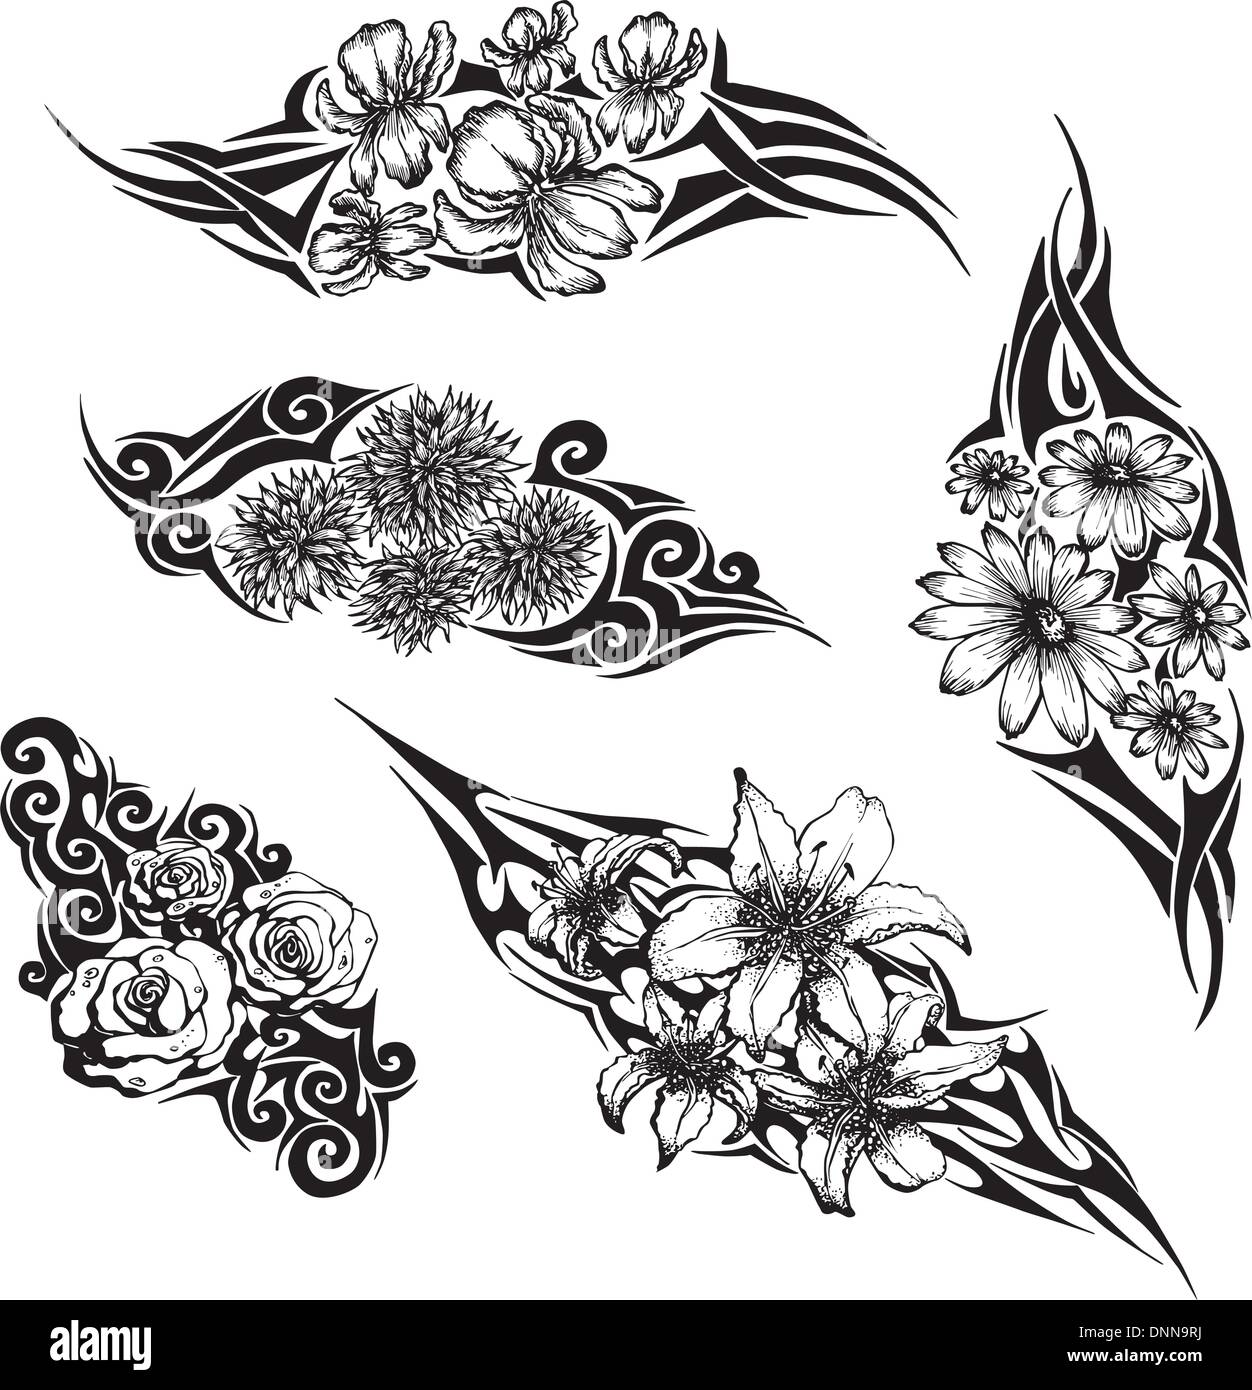 Tribal Flower Tattoos. Set of black and white vector illustrations